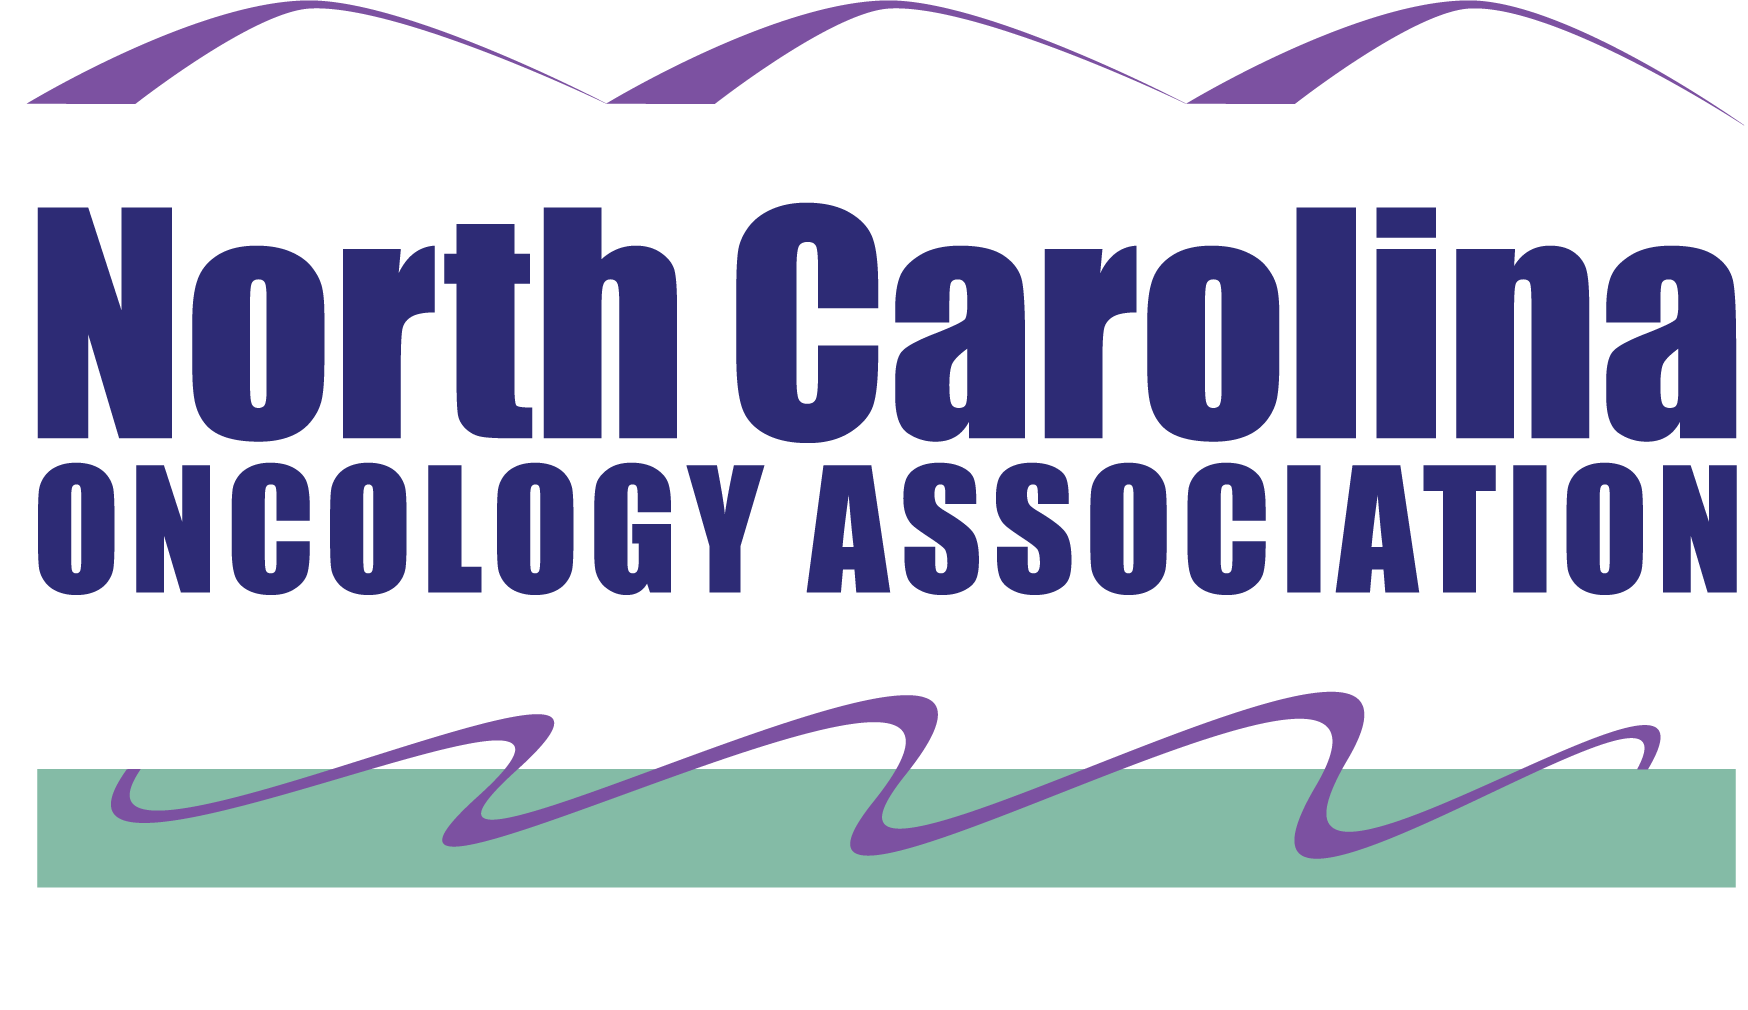 North Carolina Oncology Association